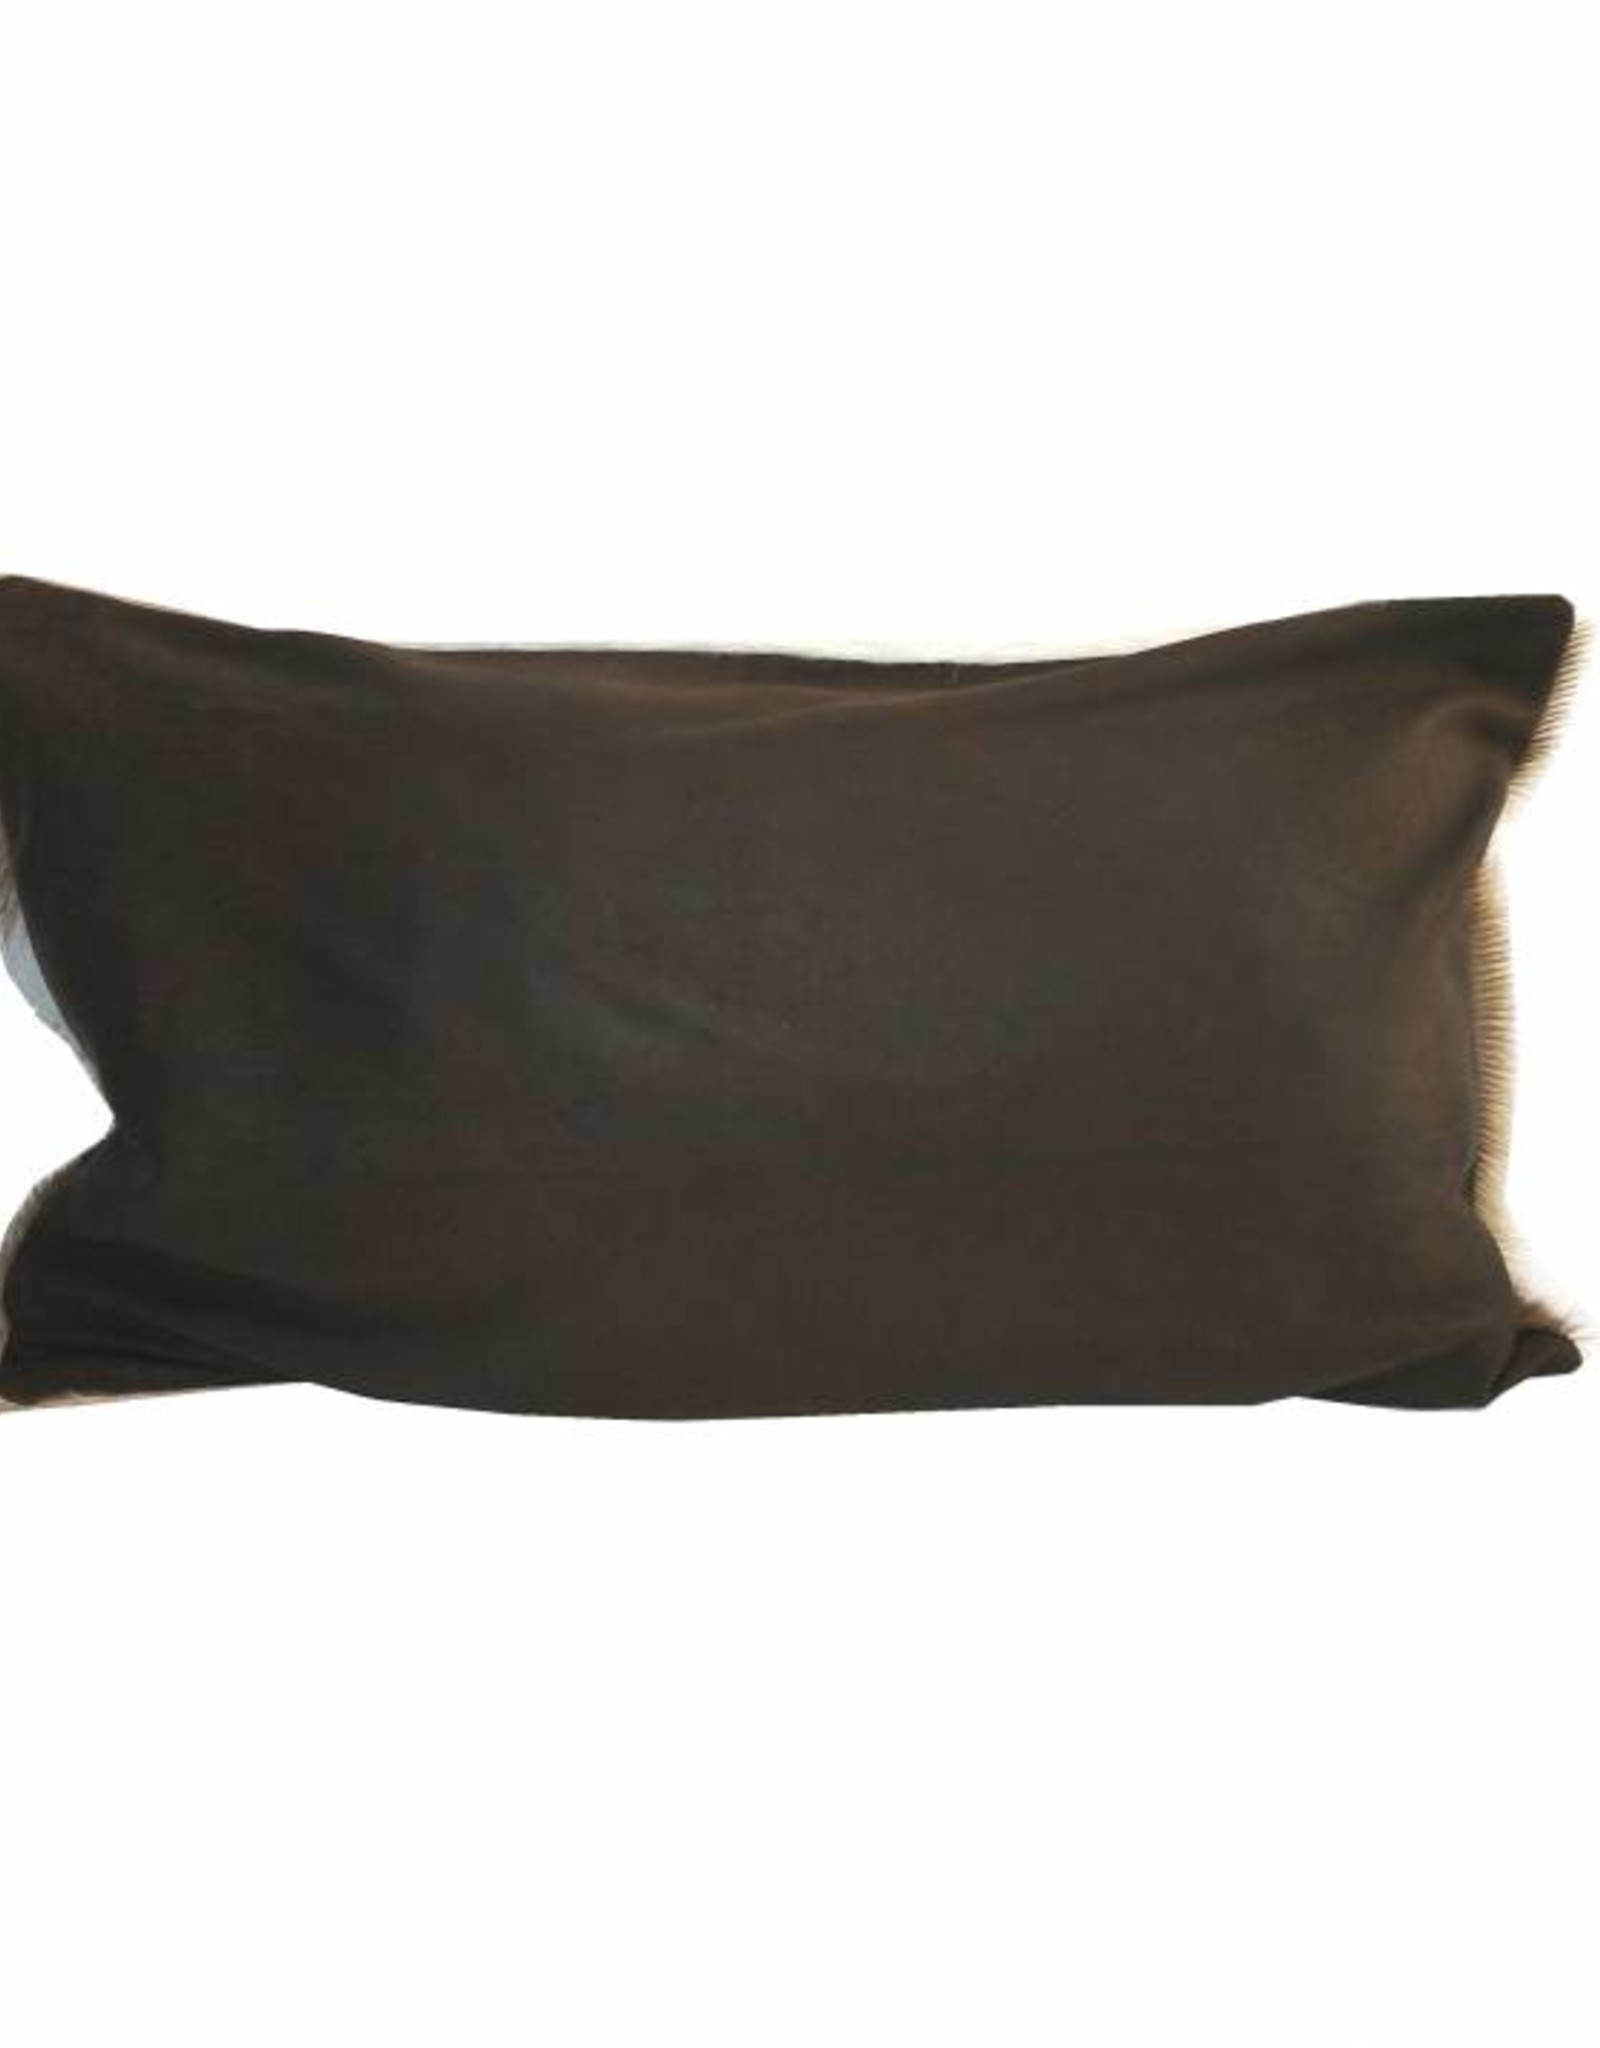 Springbok fur cushion natural - long